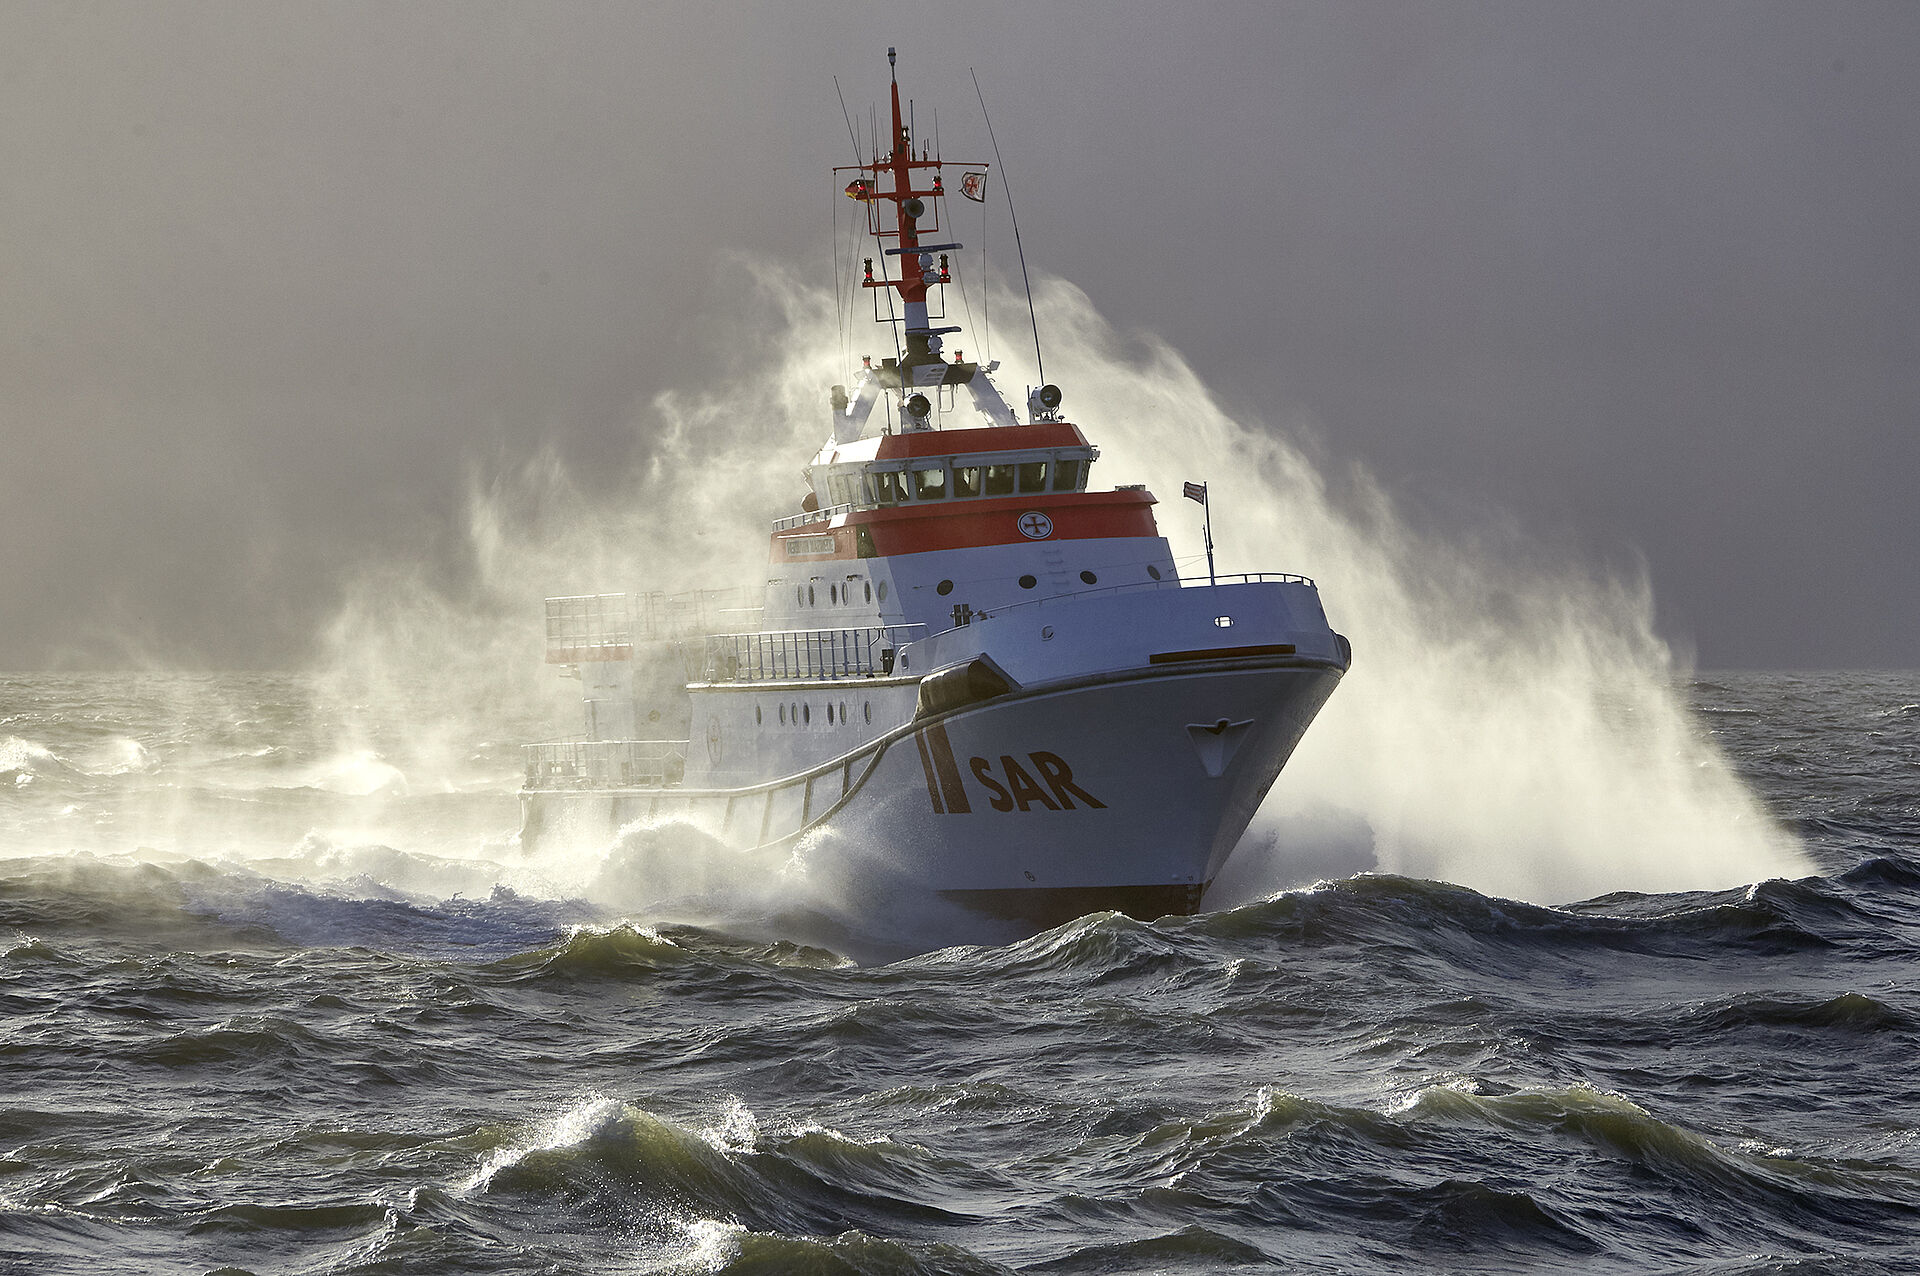 Rescue vessel in stormy seas